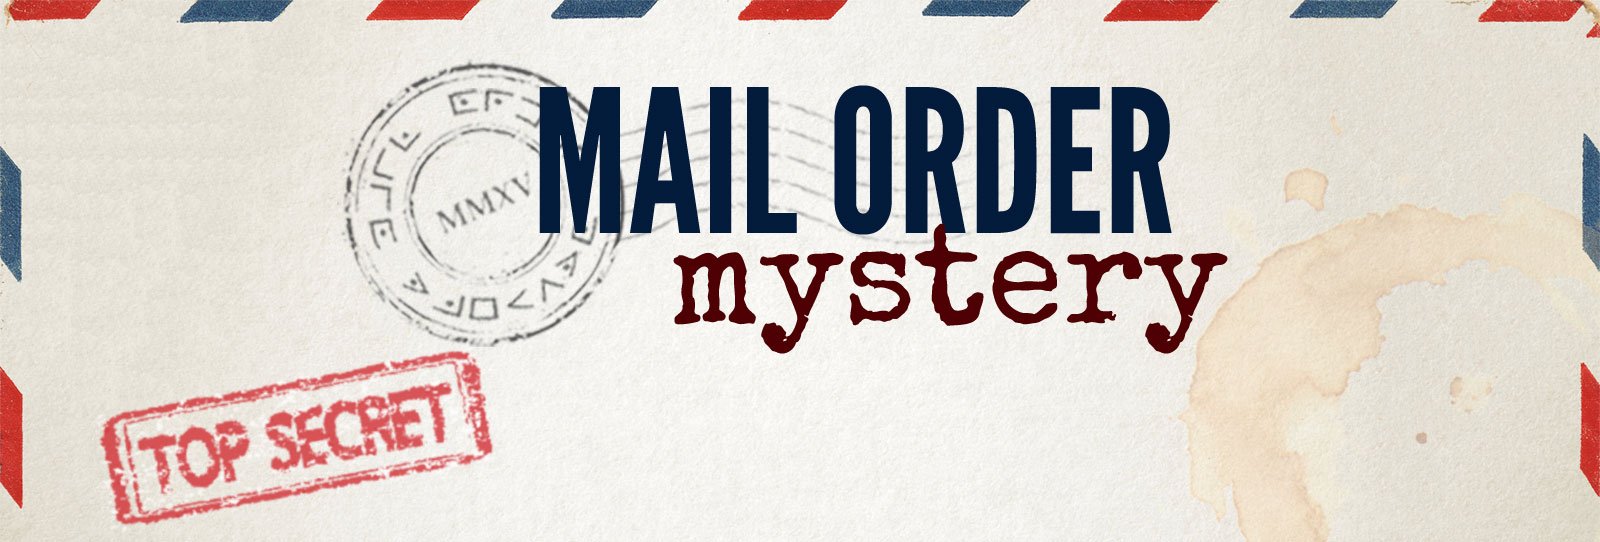 Mail Order Mystery envelope - top secret